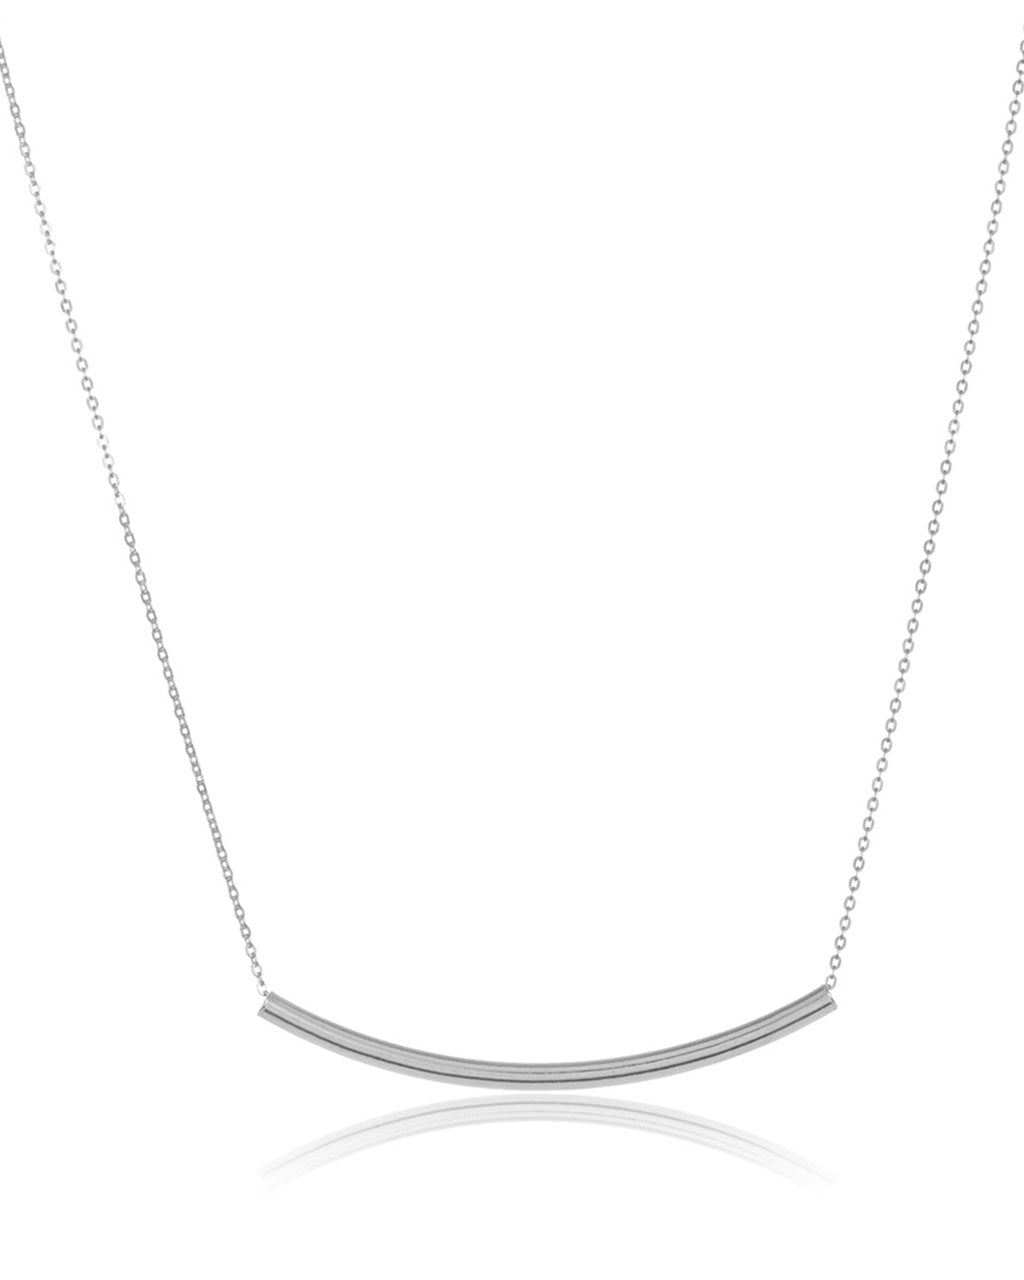 Sterling Silver Curved Bar Pendant Necklace - Sterling Forever